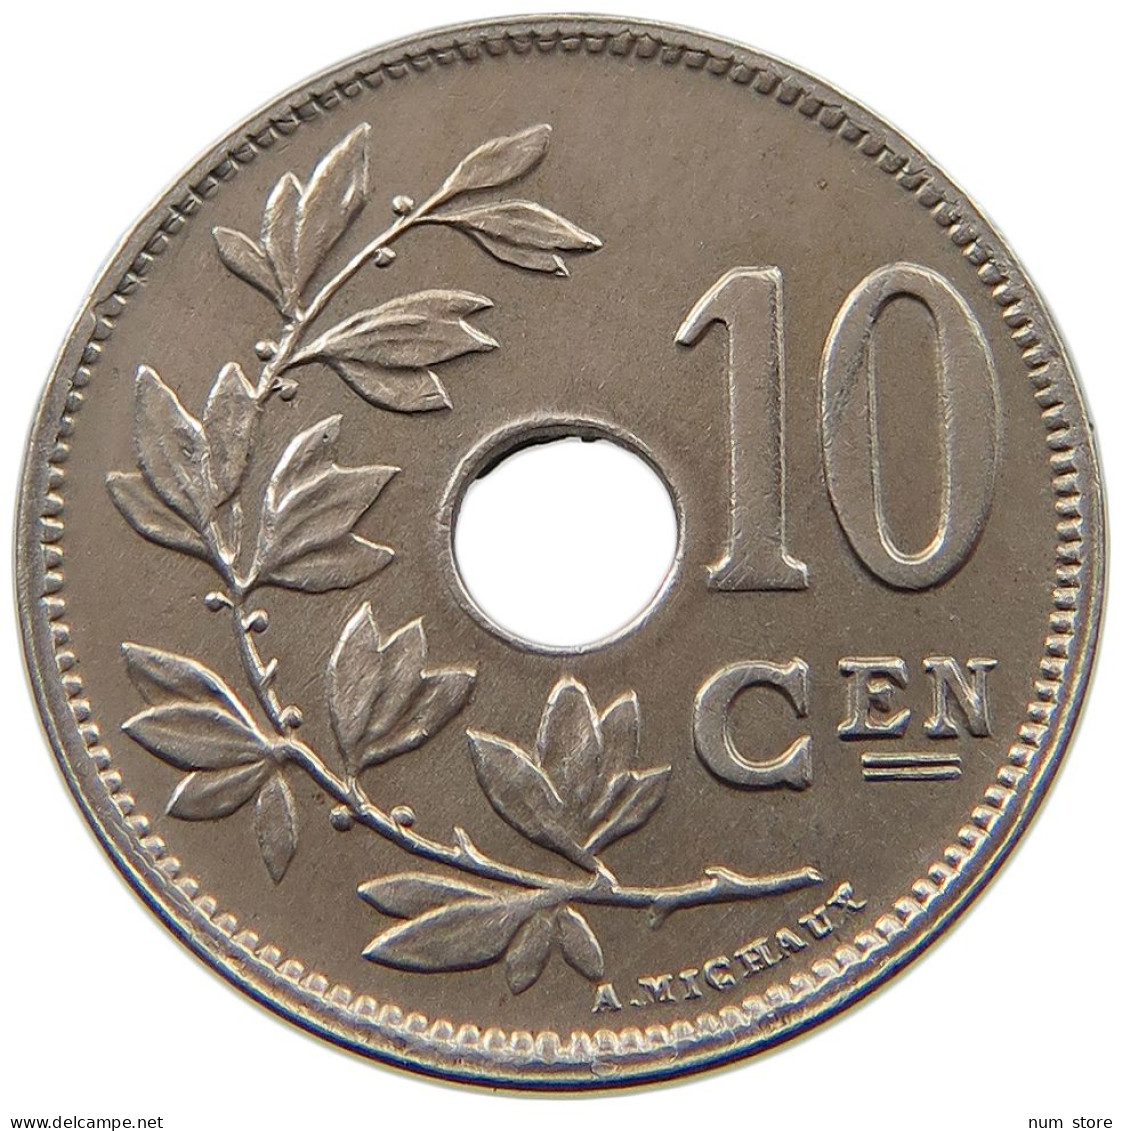 BELGIUM 10 CENTIMES 1925/4 MINTING ERROR 10 CENTIMES 1925/4 #t065 0229 - 10 Cent